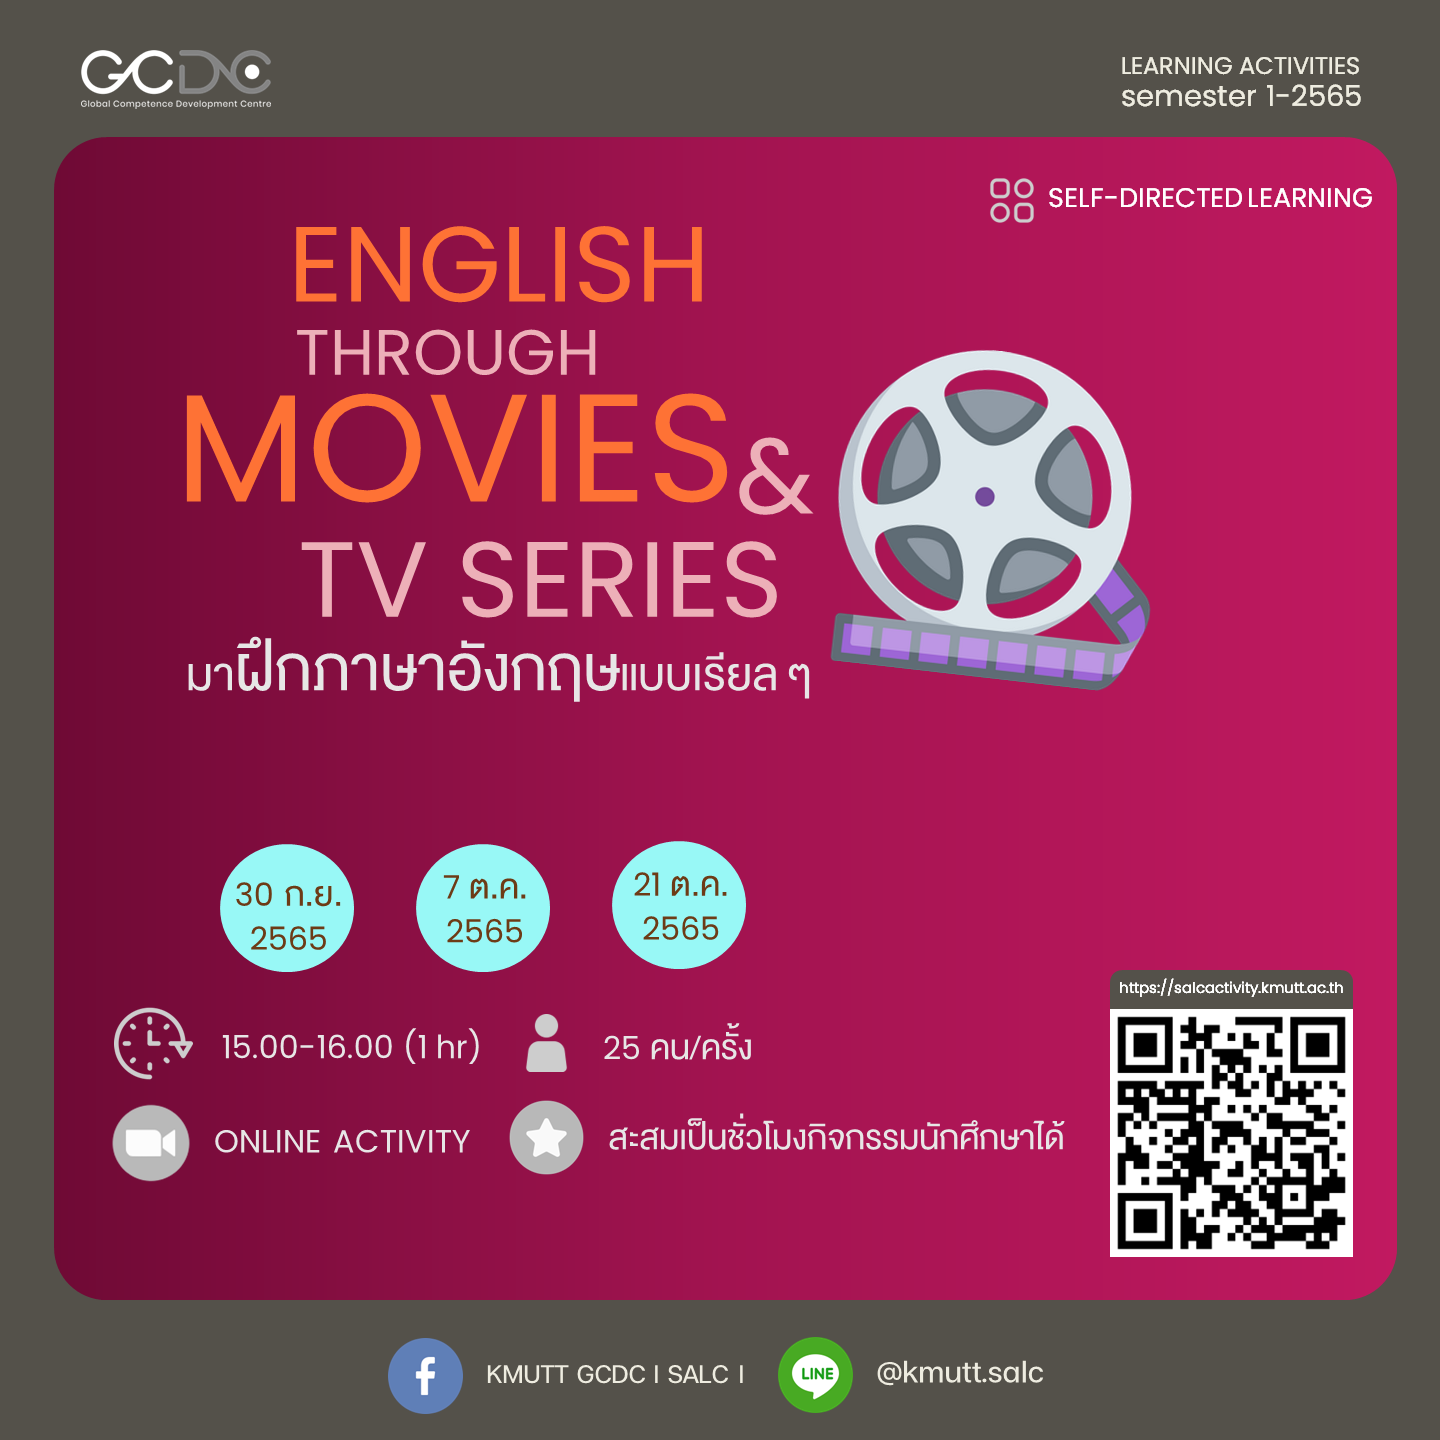 English through Movies & TV Series